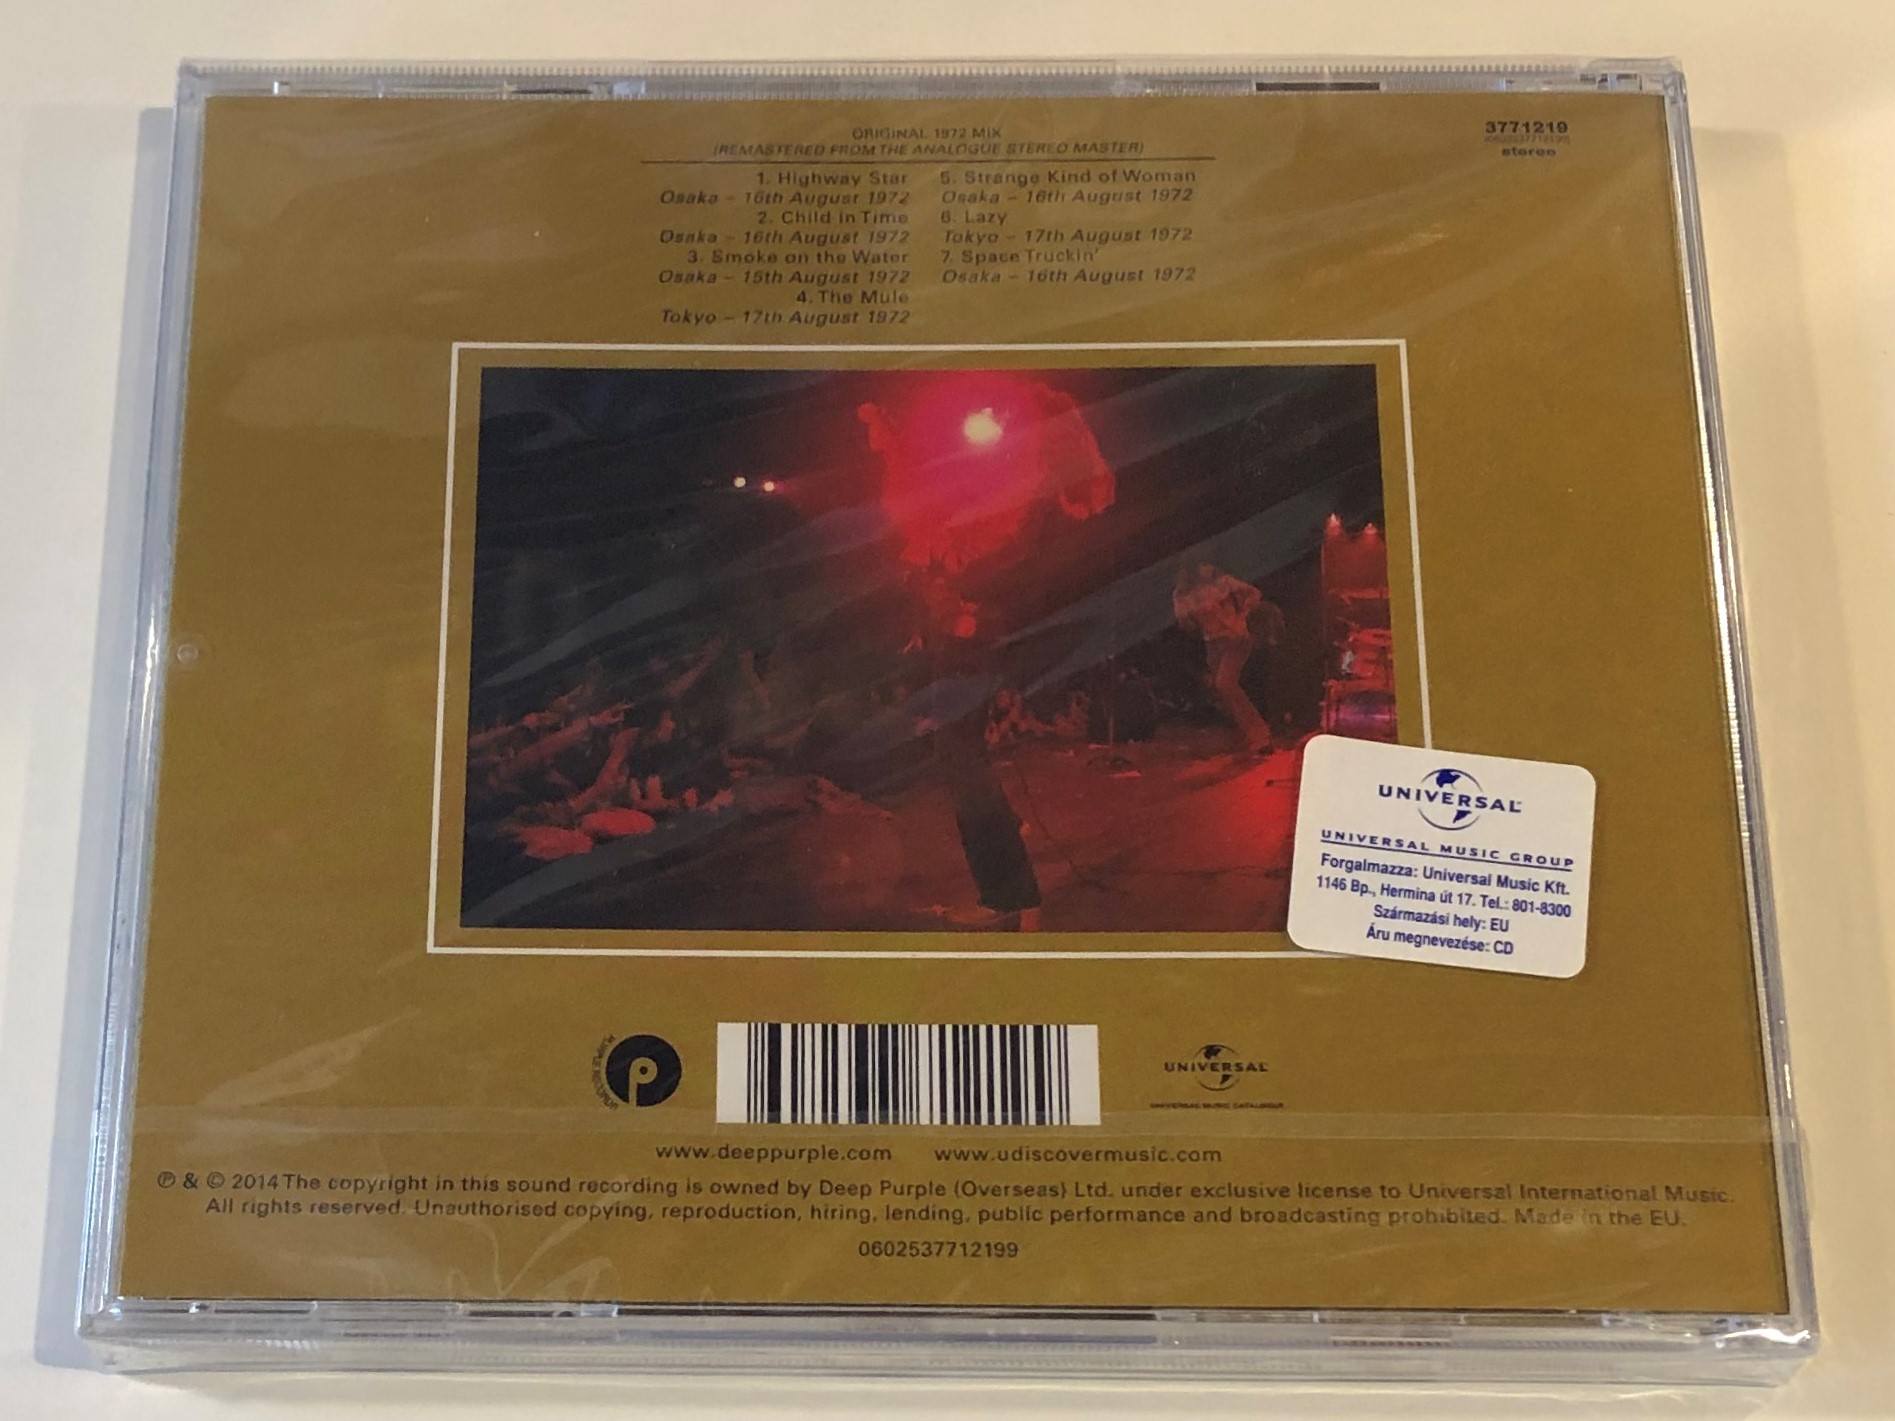 deep-purple-made-in-japan-universal-music-group-audio-cd-2014-stereo-3771219-2-.jpg